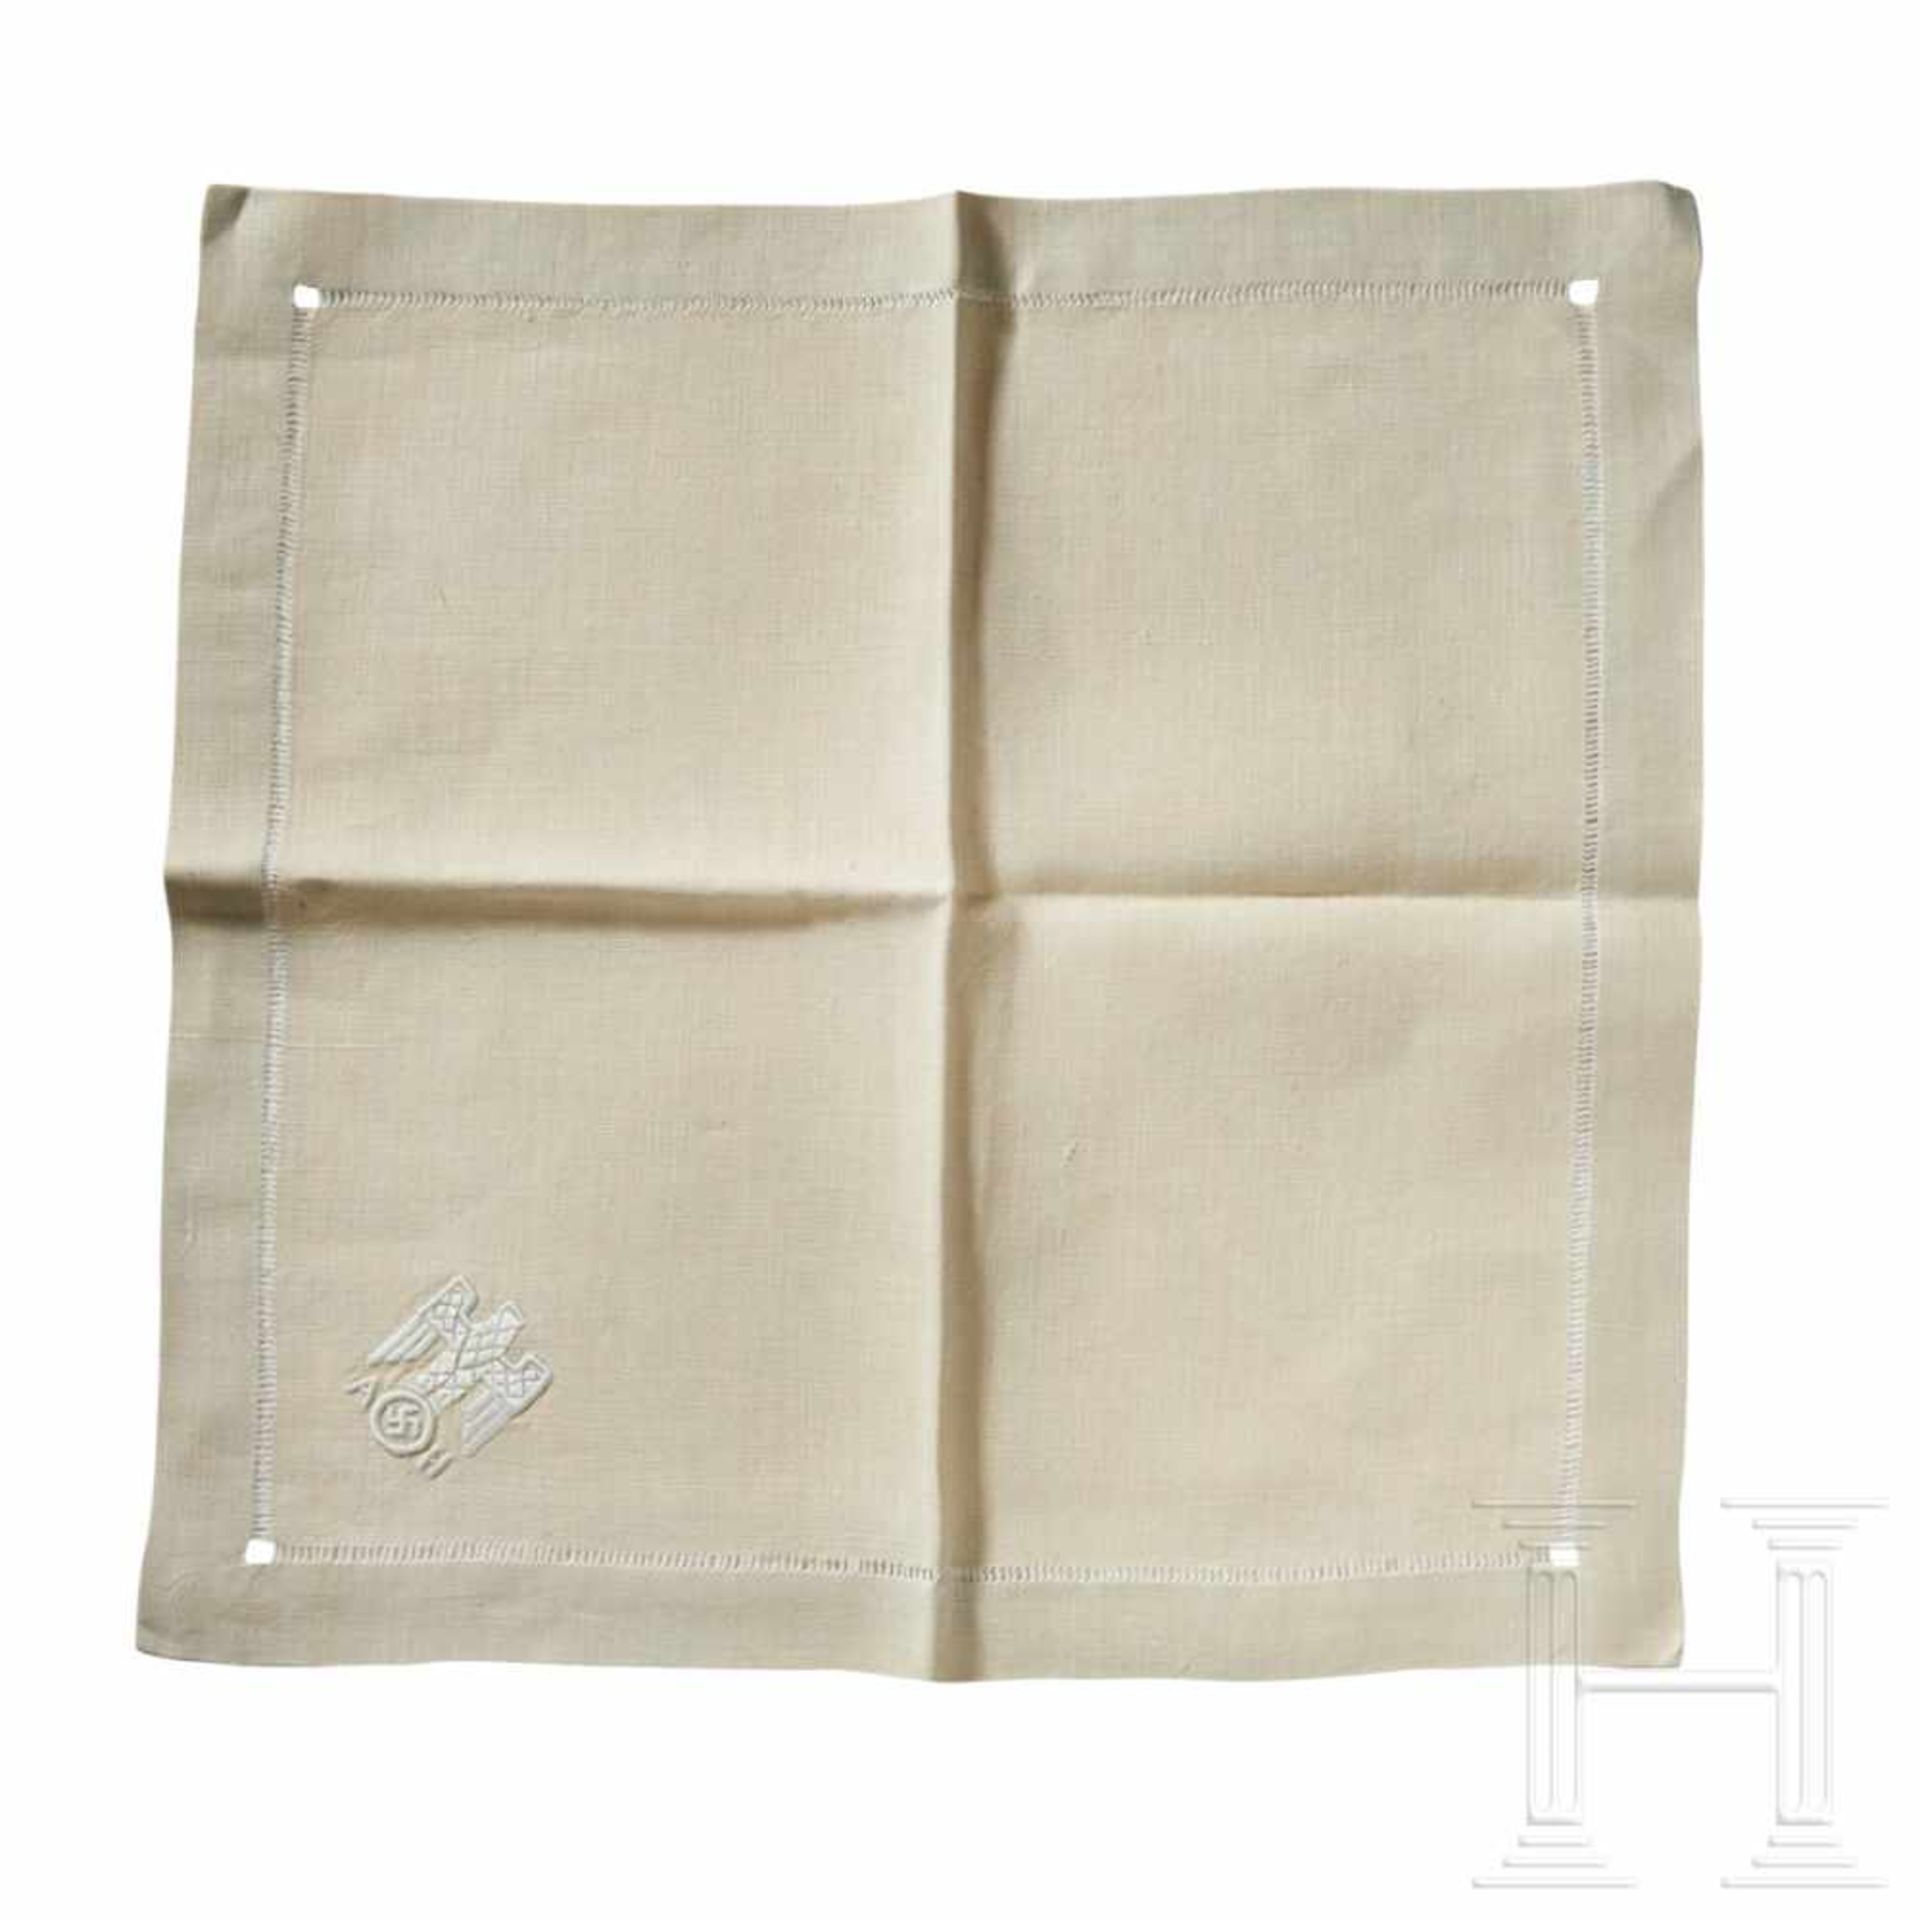 Adolf Hitler – a Napkin from Informal Personal Table ServiceCream color cloth linen napkin with - Bild 3 aus 3